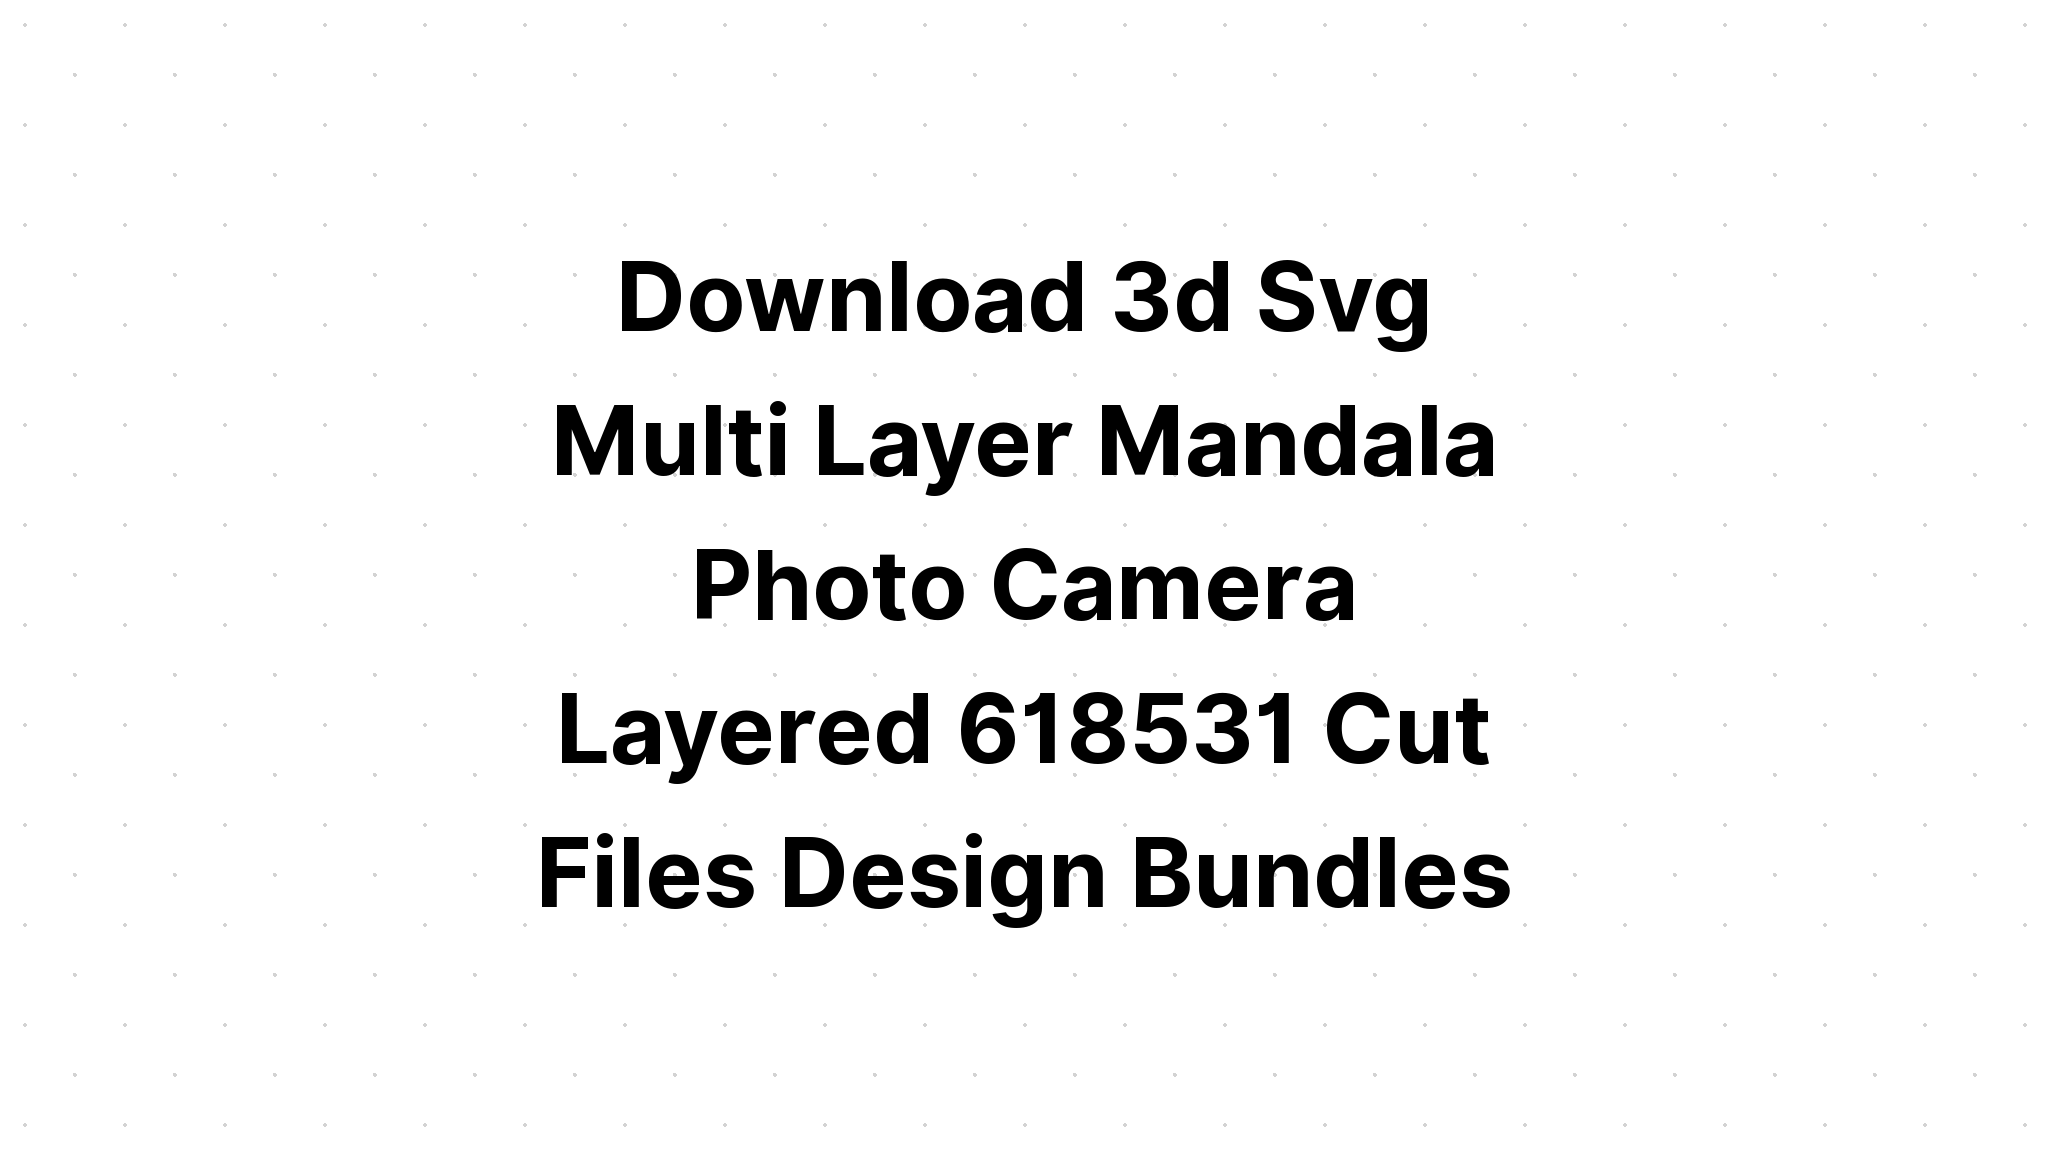 Download Multi Layered Mandala Free Svg Images For Cricut - Free SVG Cut File